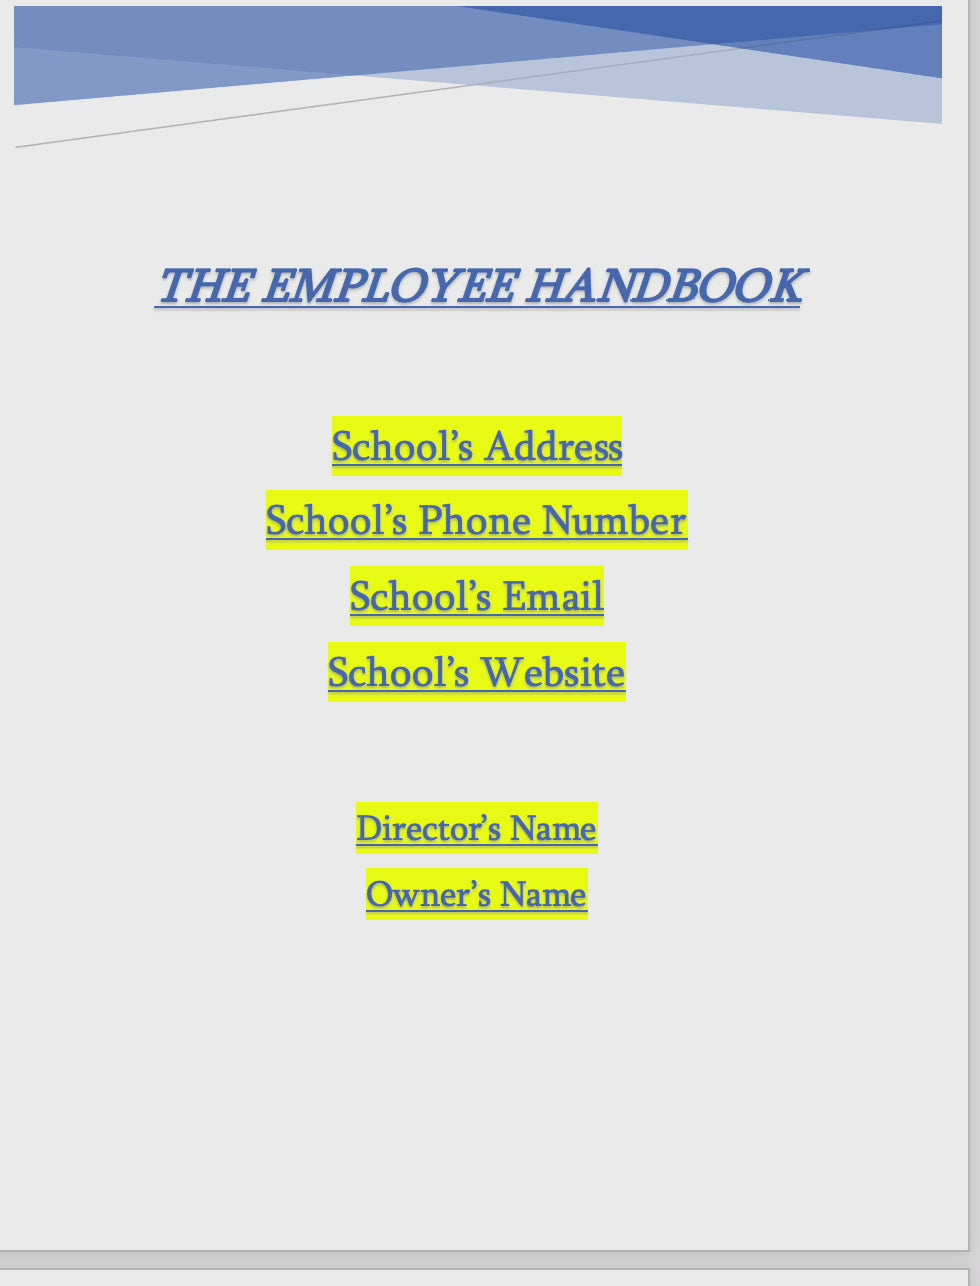 The Employee Handbook